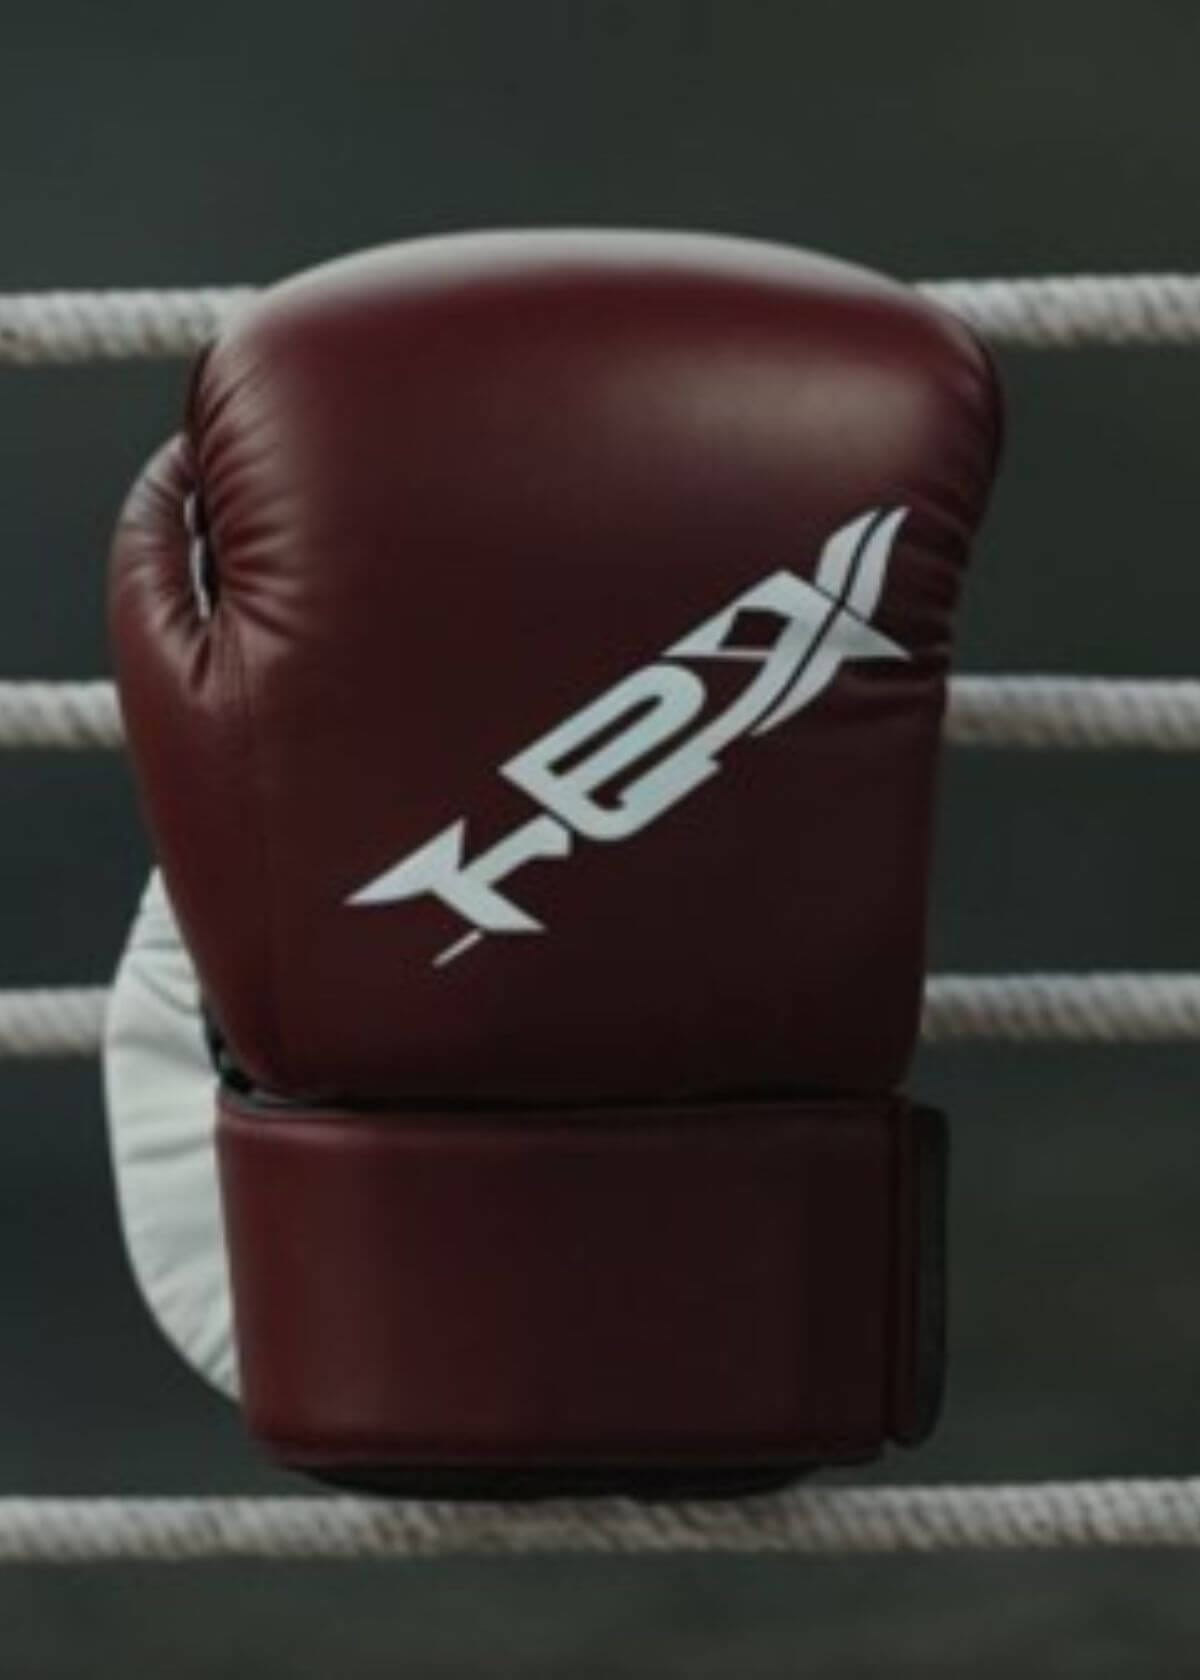 RDX F7 Boxing Gloves